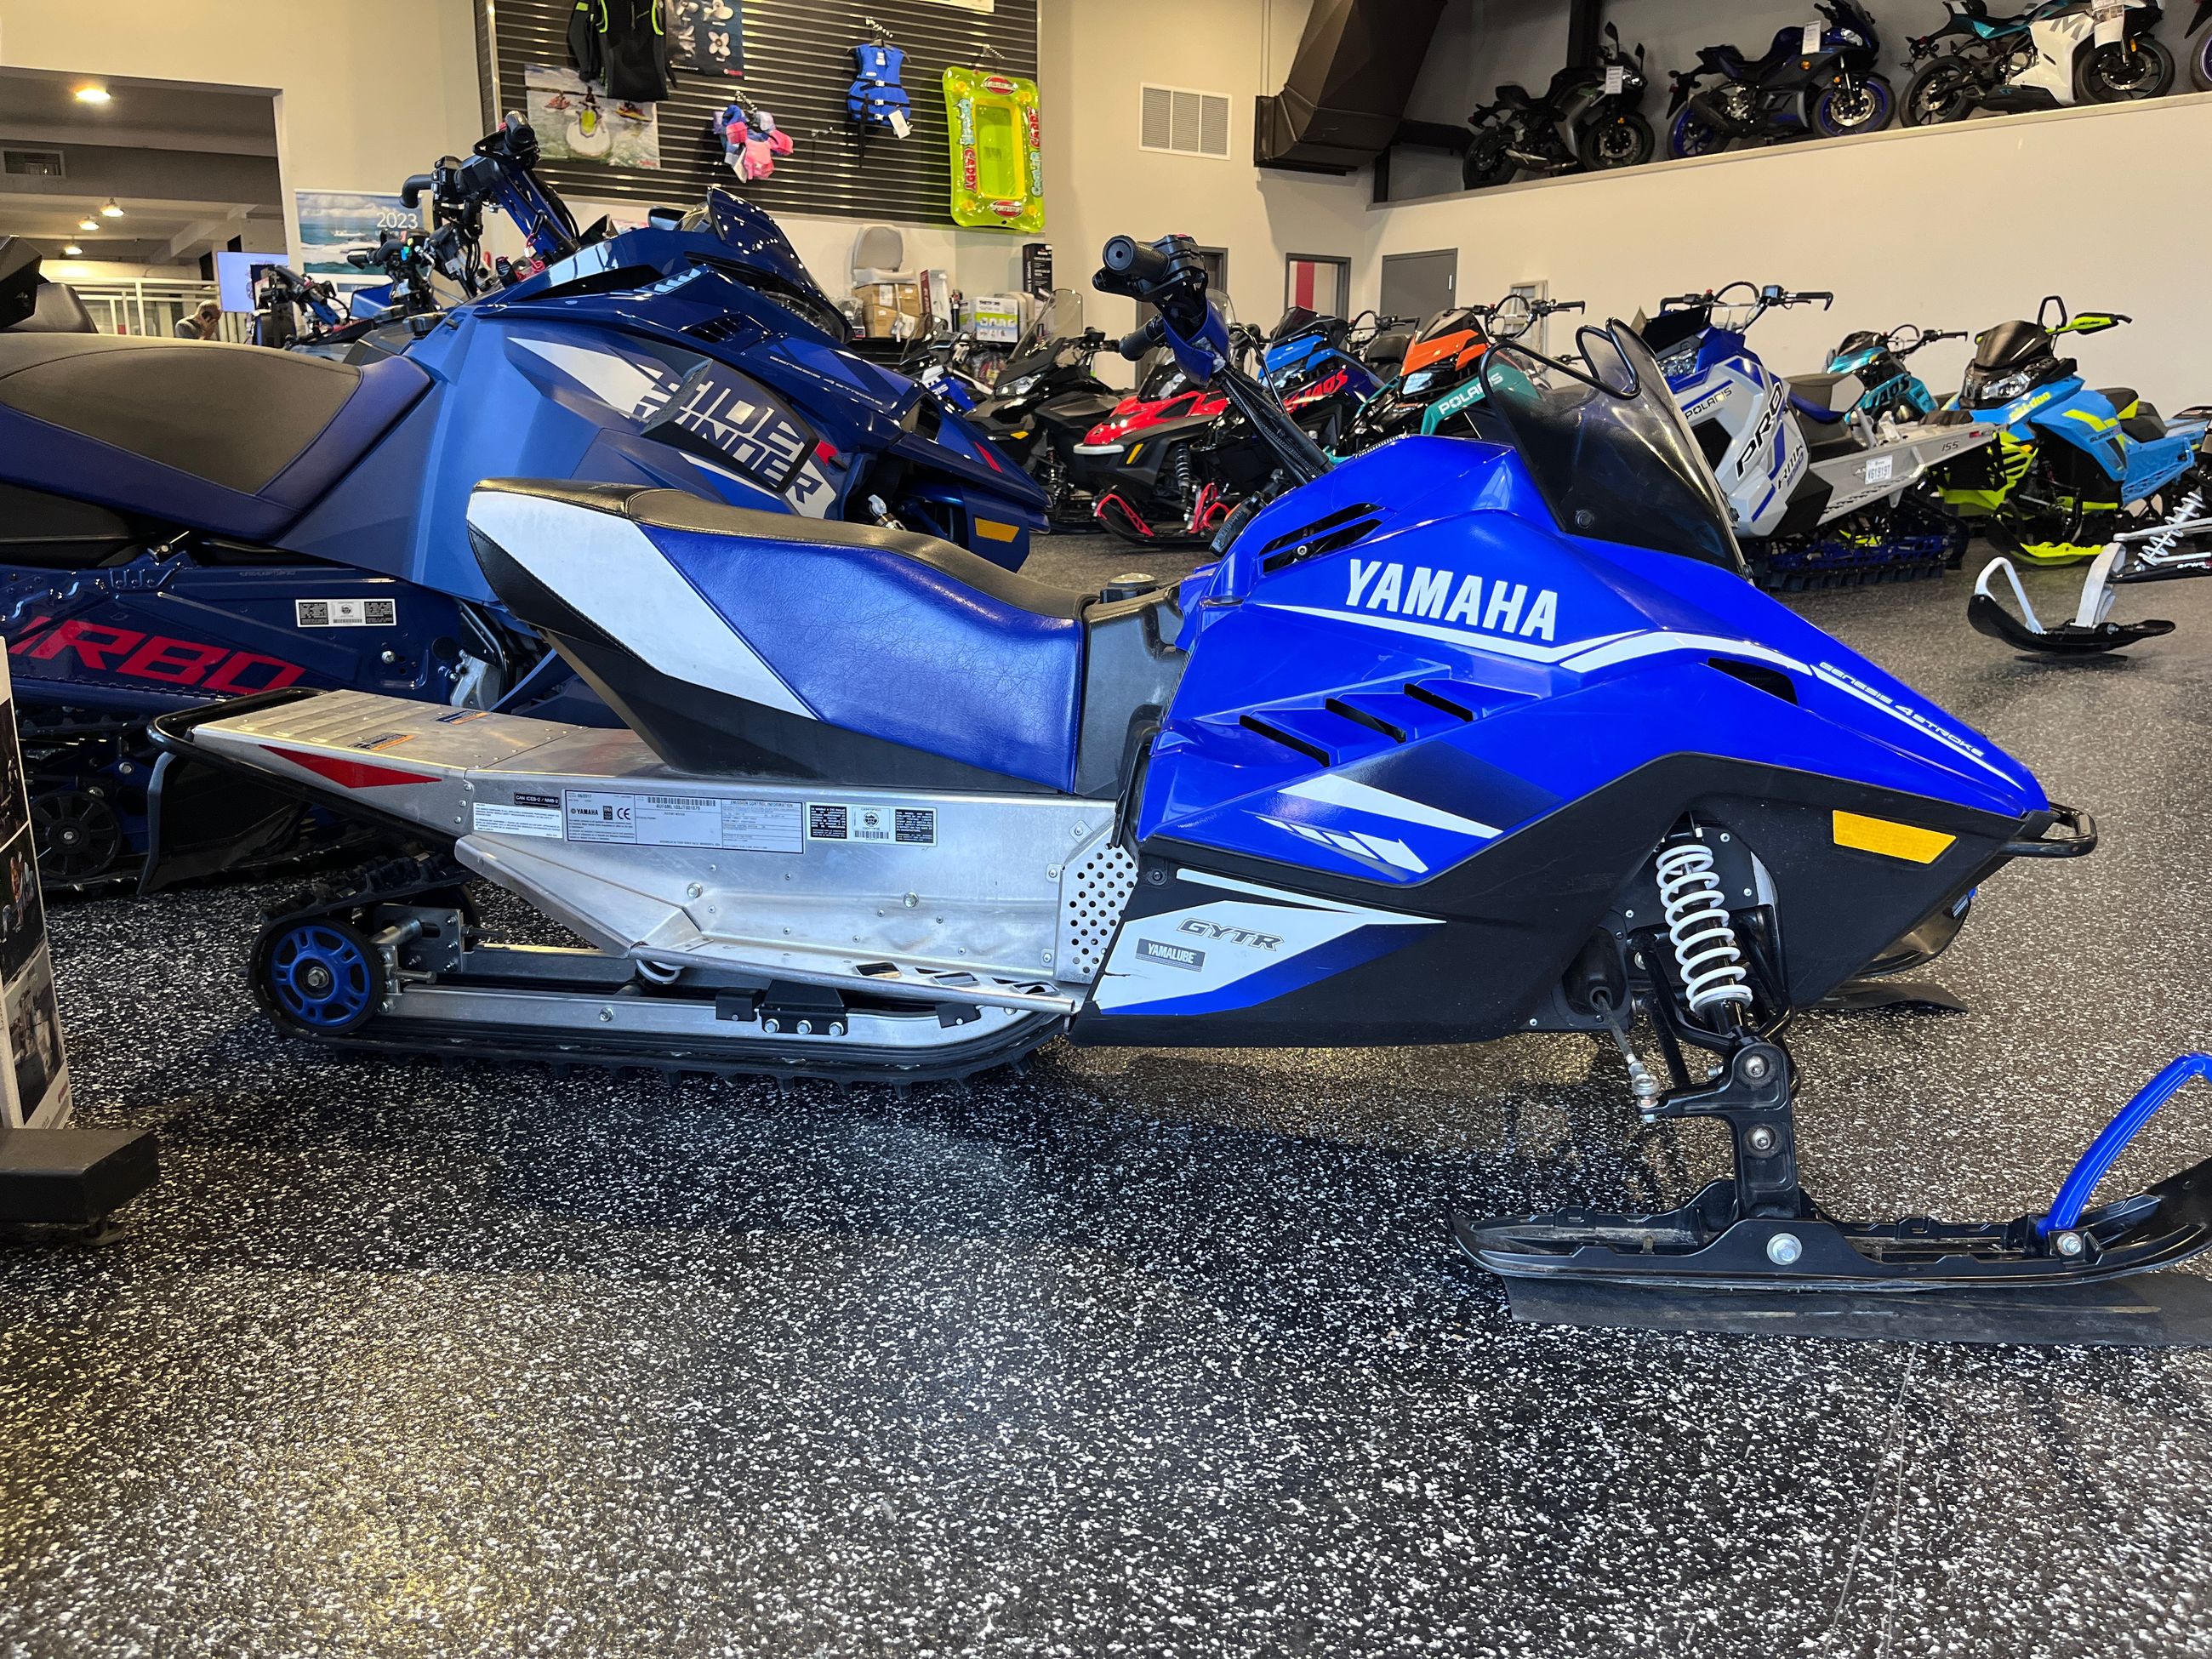 Yamaha SNOSCOOT SRX 200 2018